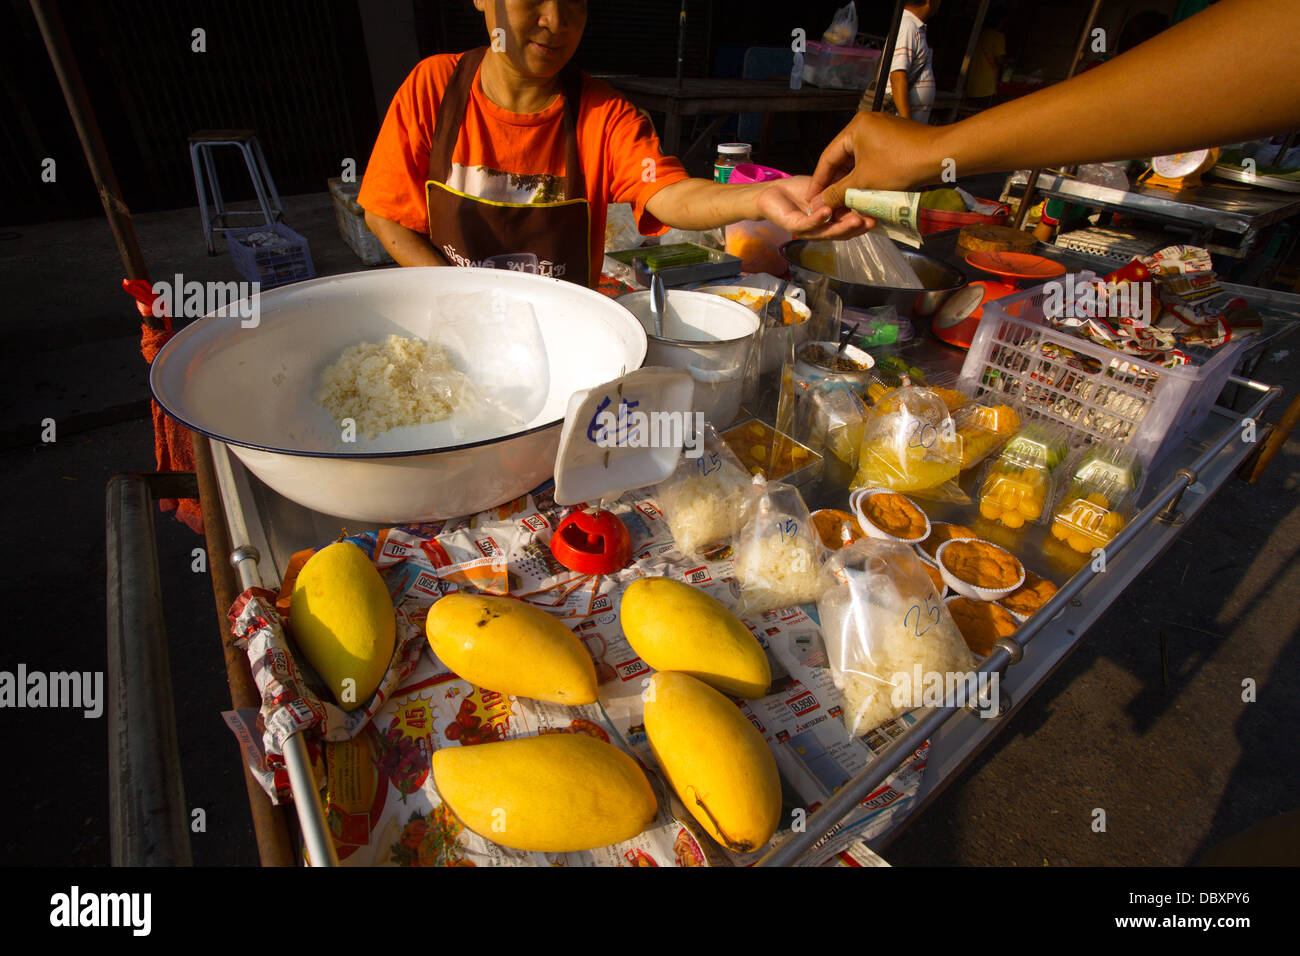 Thailandia Marzo 22, 2013 Thai mercato fresco, Mango shop in materie prime fresche street market in provincia Nakornratchasima, Thailandia Foto Stock